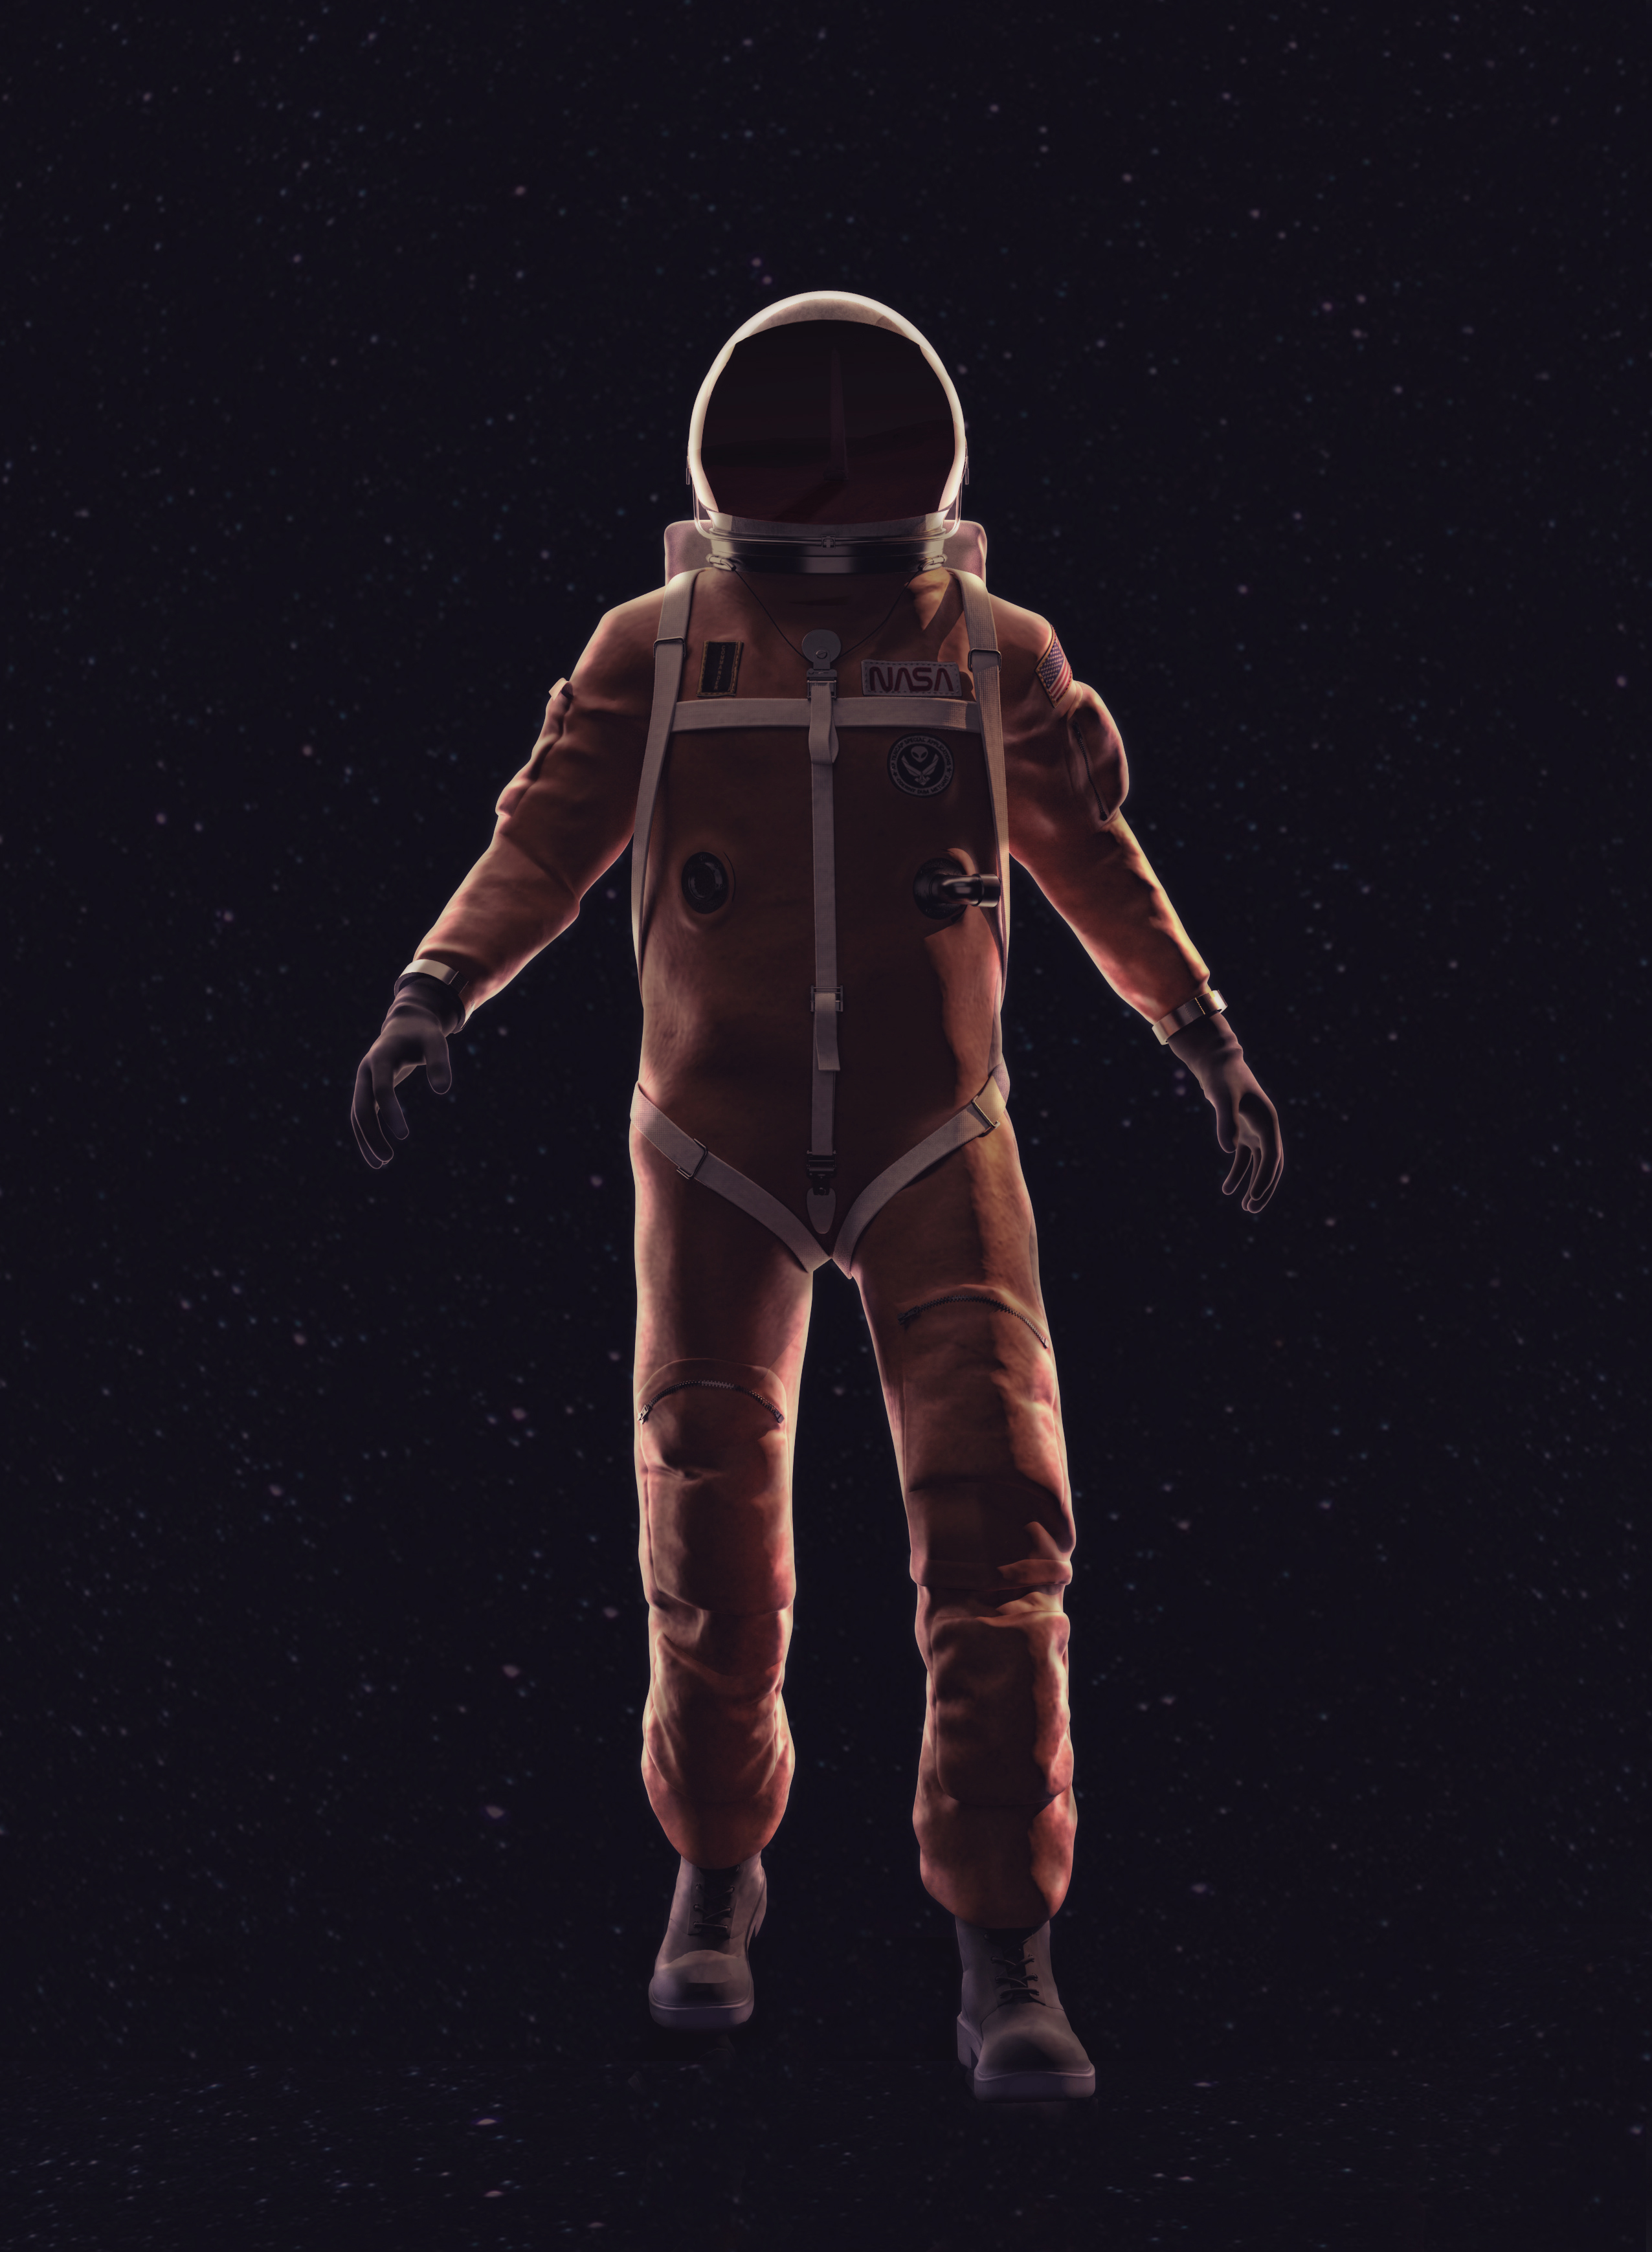 Astronaut_compo.jpg